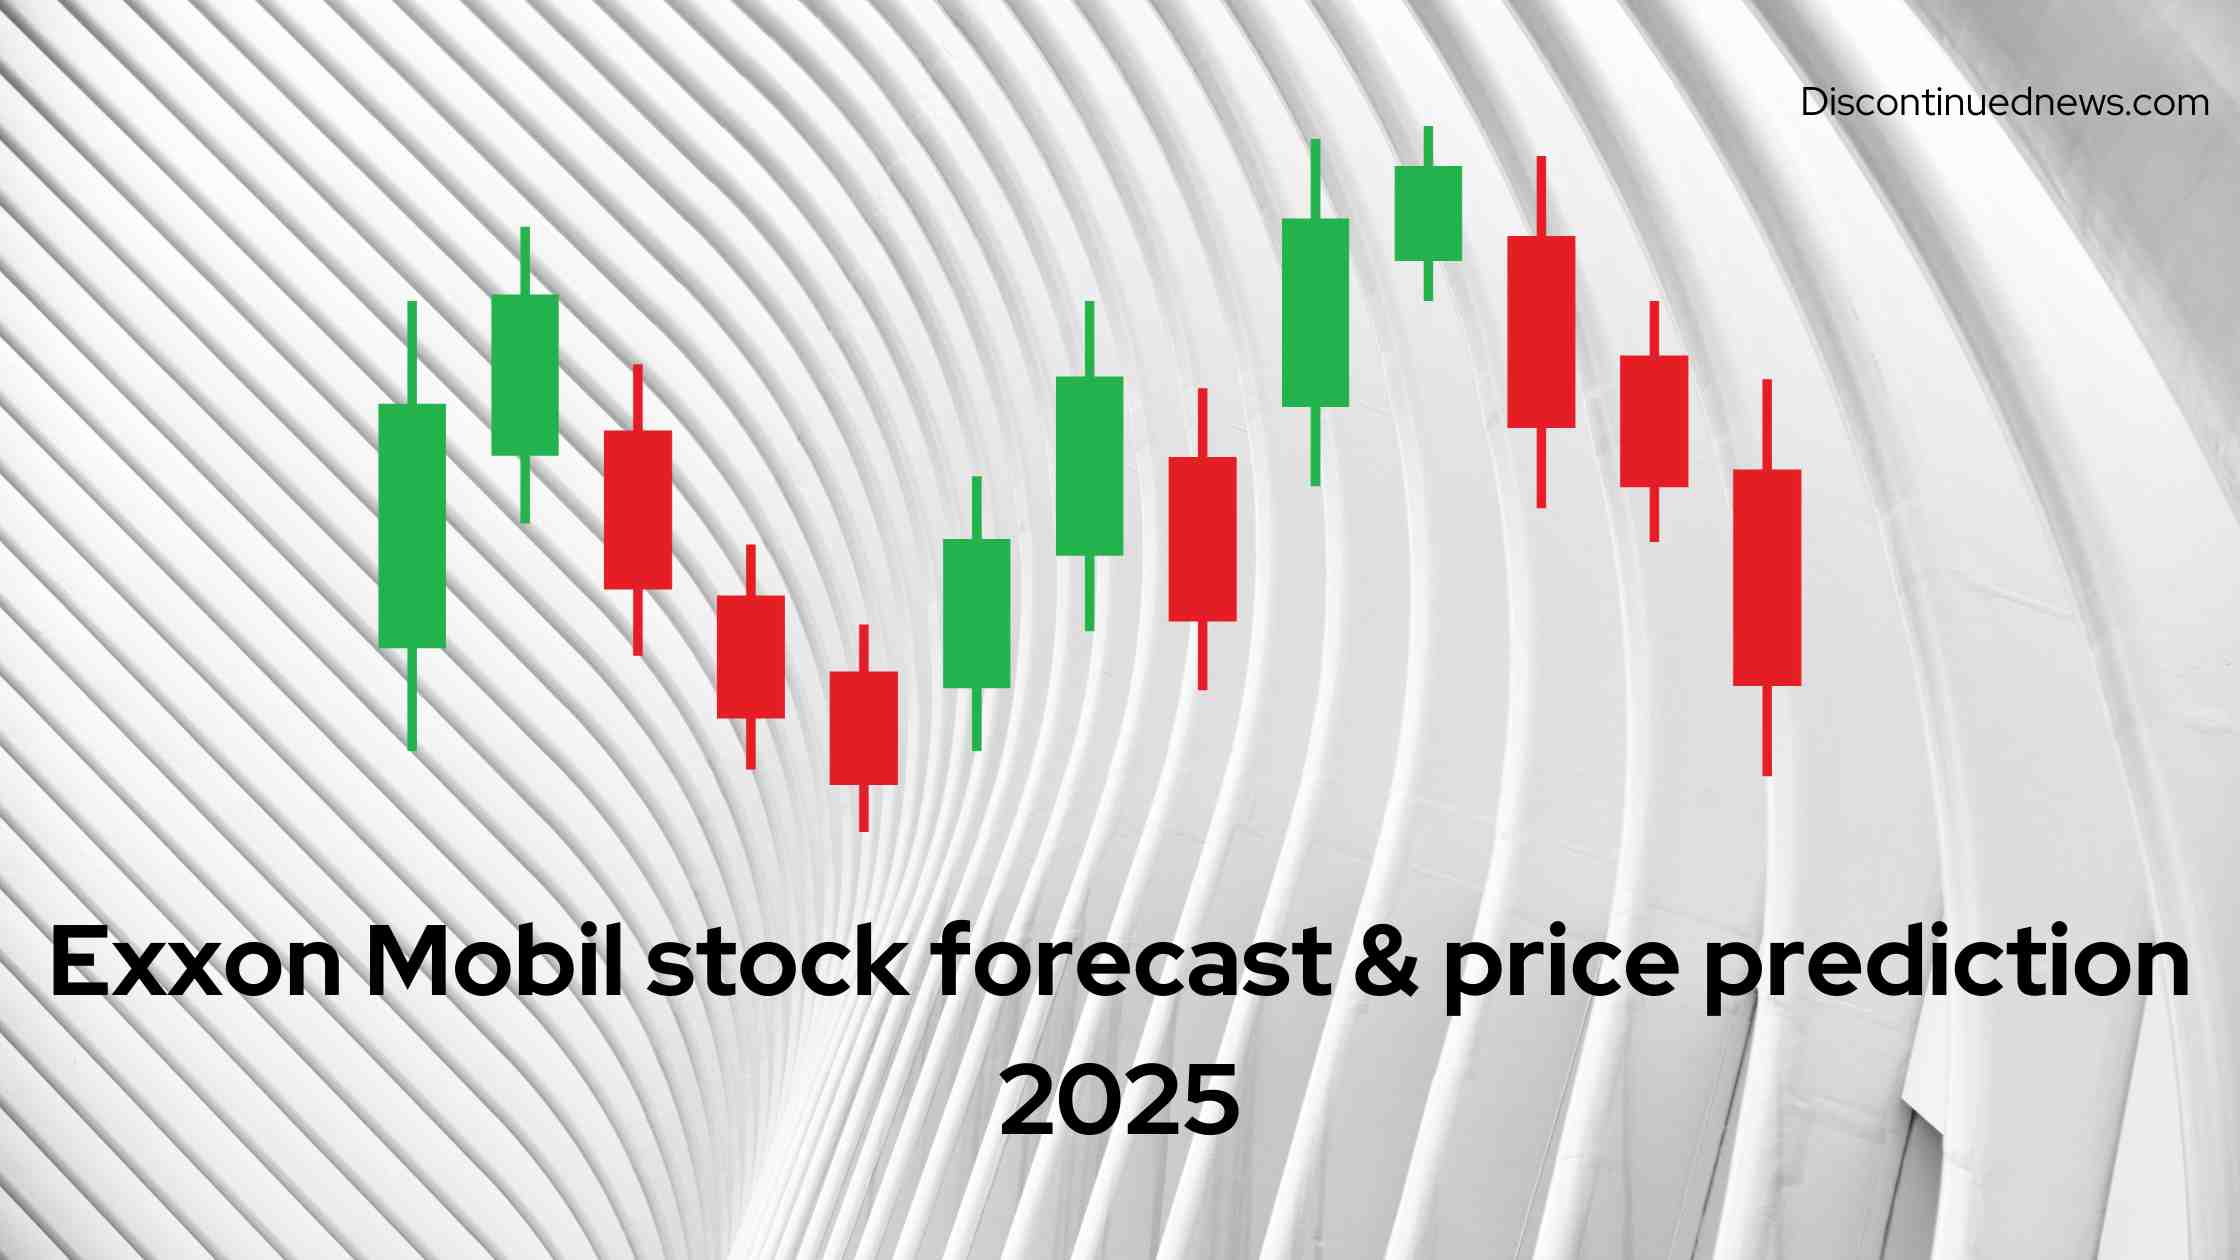 exxon mobil stock forecast 2025